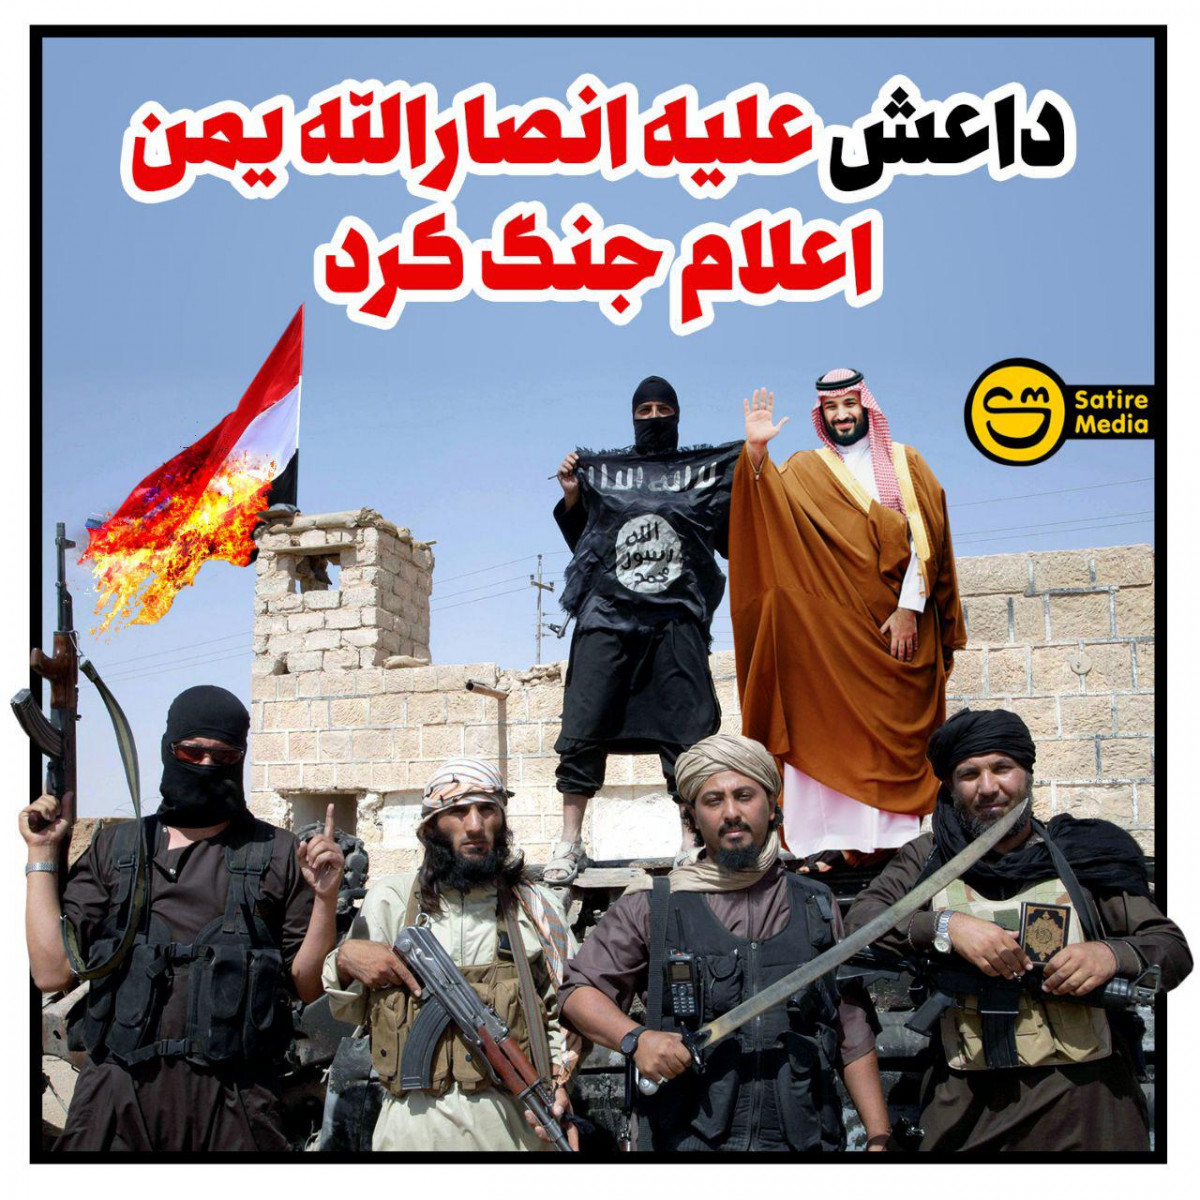 پوستر: داعش علیه انصارالله یمن اعلام جنگ کرد